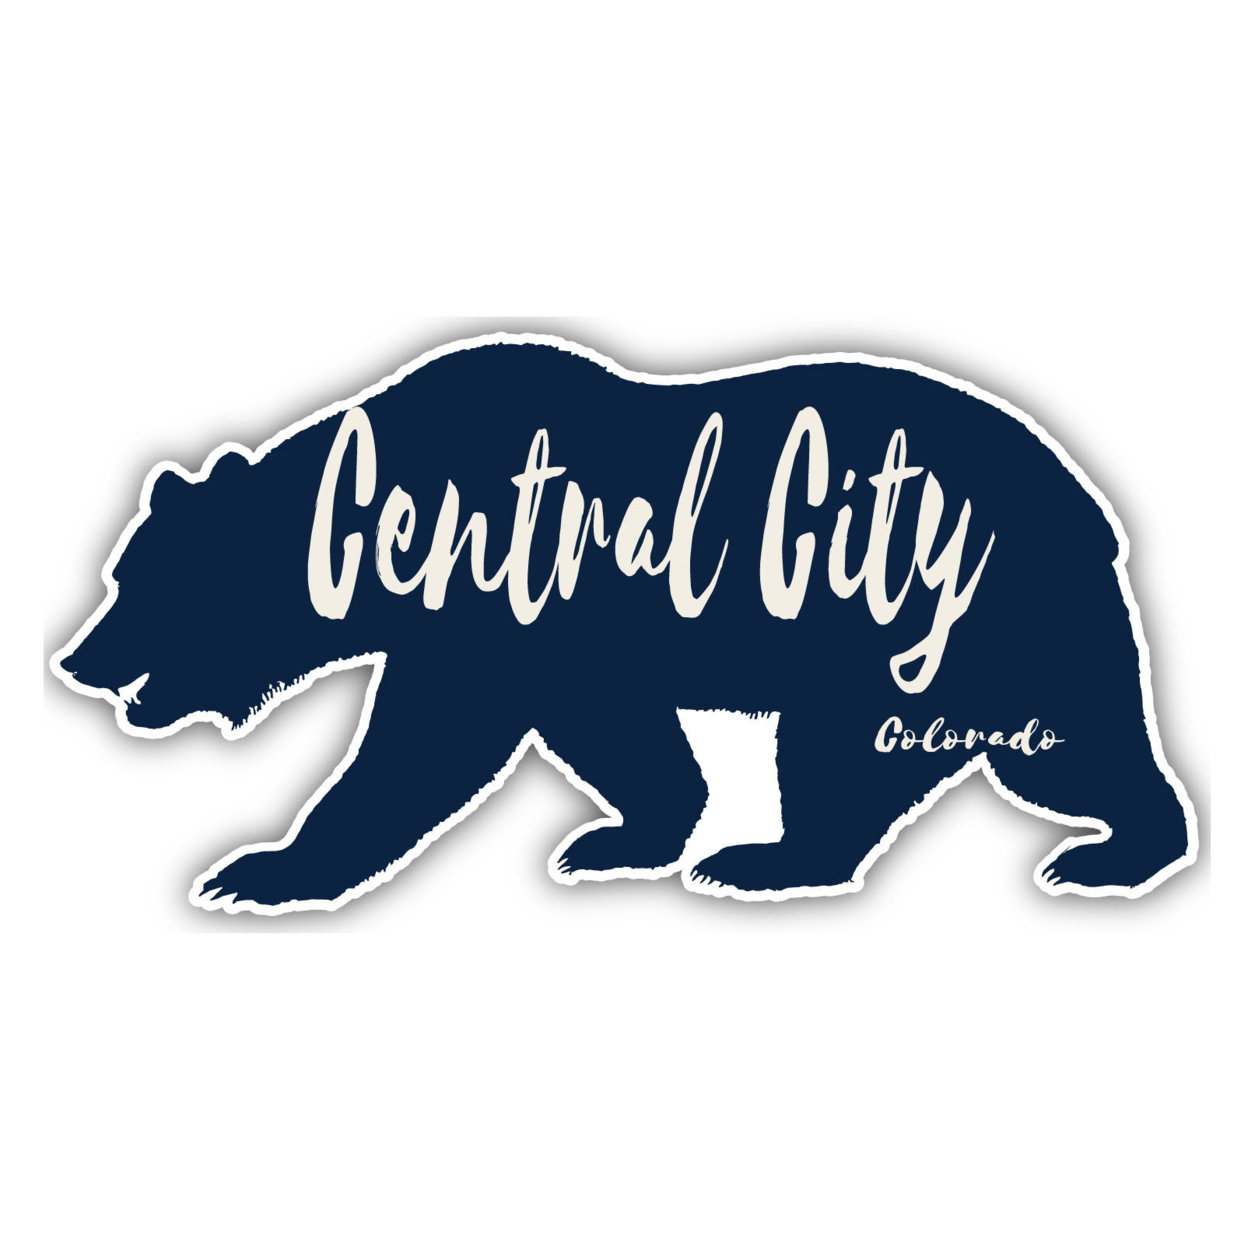 Central City Colorado Souvenir Decorative Stickers (Choose Theme And Size) - Single Unit, 4-Inch, Camp Life